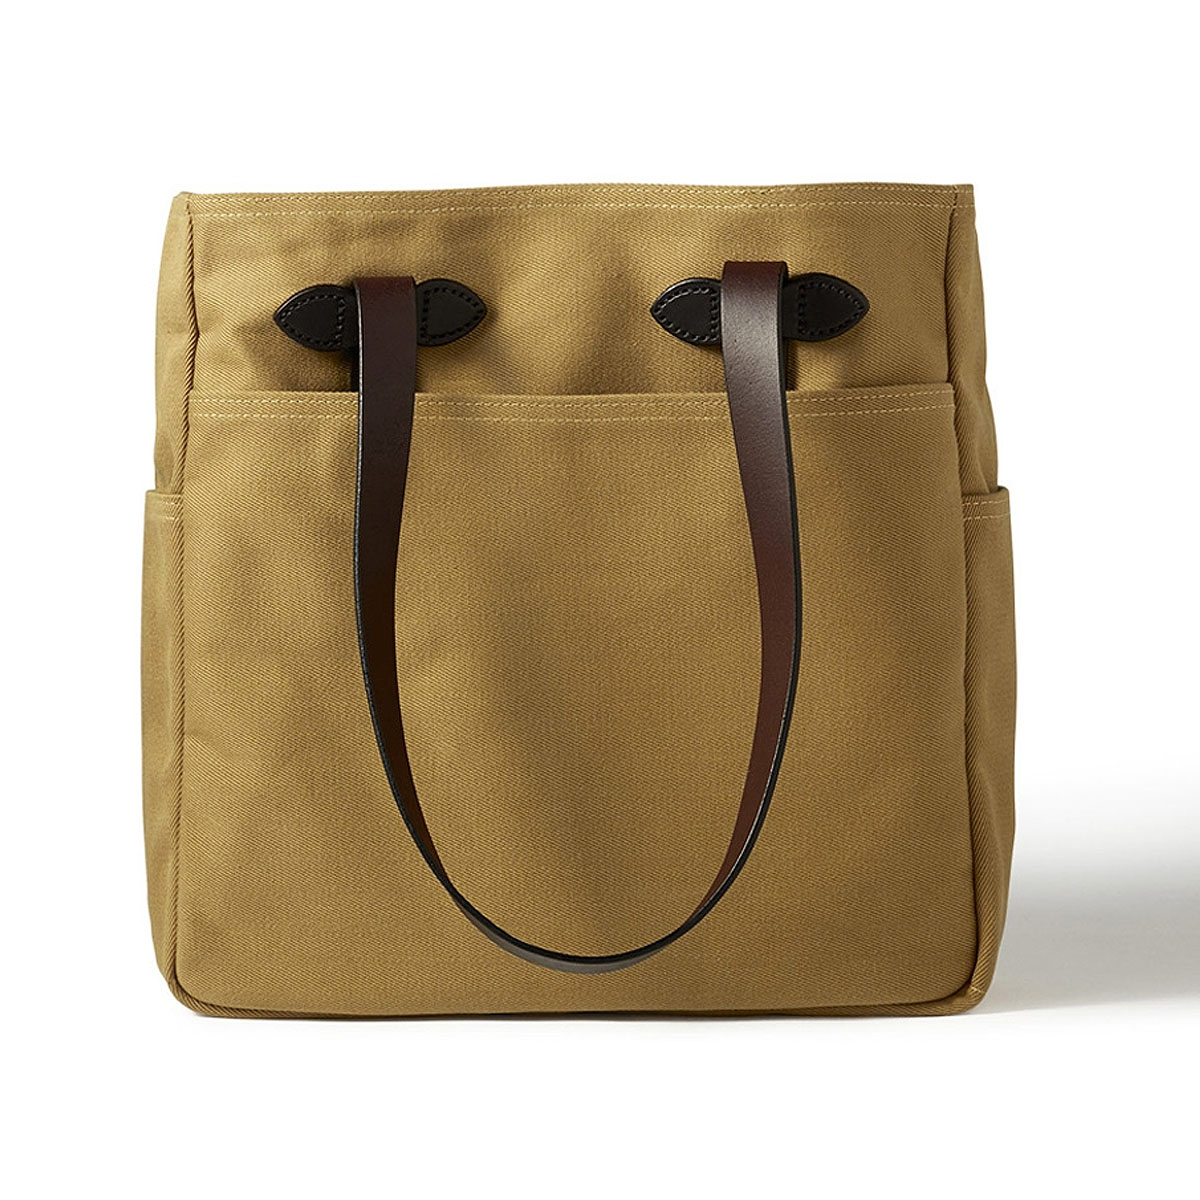 Filson Tote bag Tan, classic-looking shopper